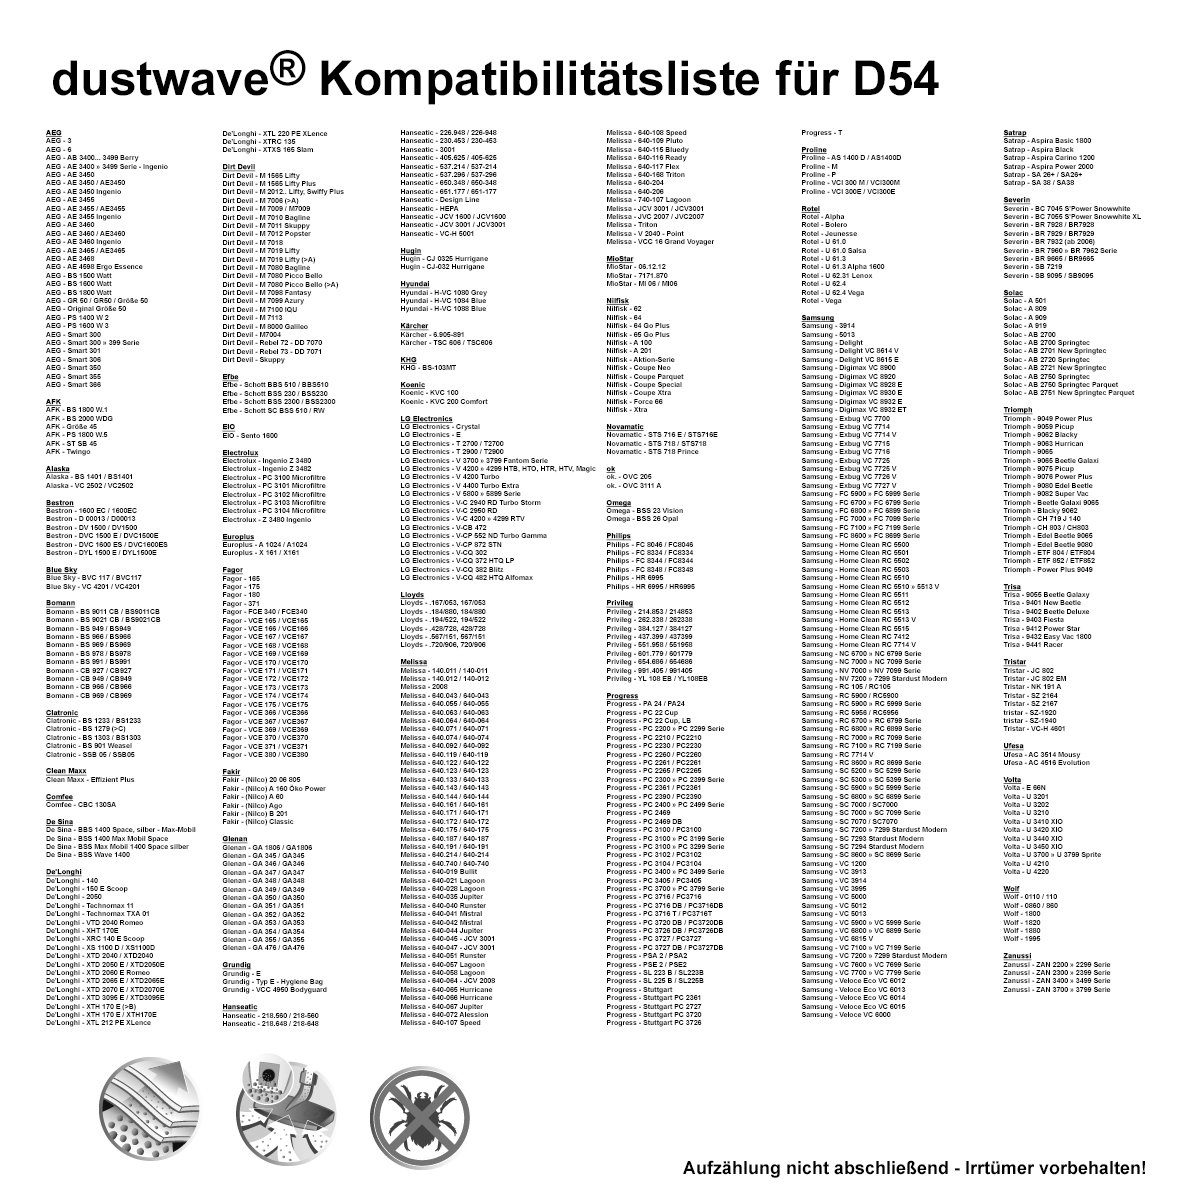 AmazonBasics W31 Hepa-Filter + St., - Dustwave passend 1 Standard 1 15x15cm 1 Staubsaugerbeutel Test-Set, W31, Test-Set, Staubsaugerbeutel (ca. zuschneidbar) für AmazonBasics -